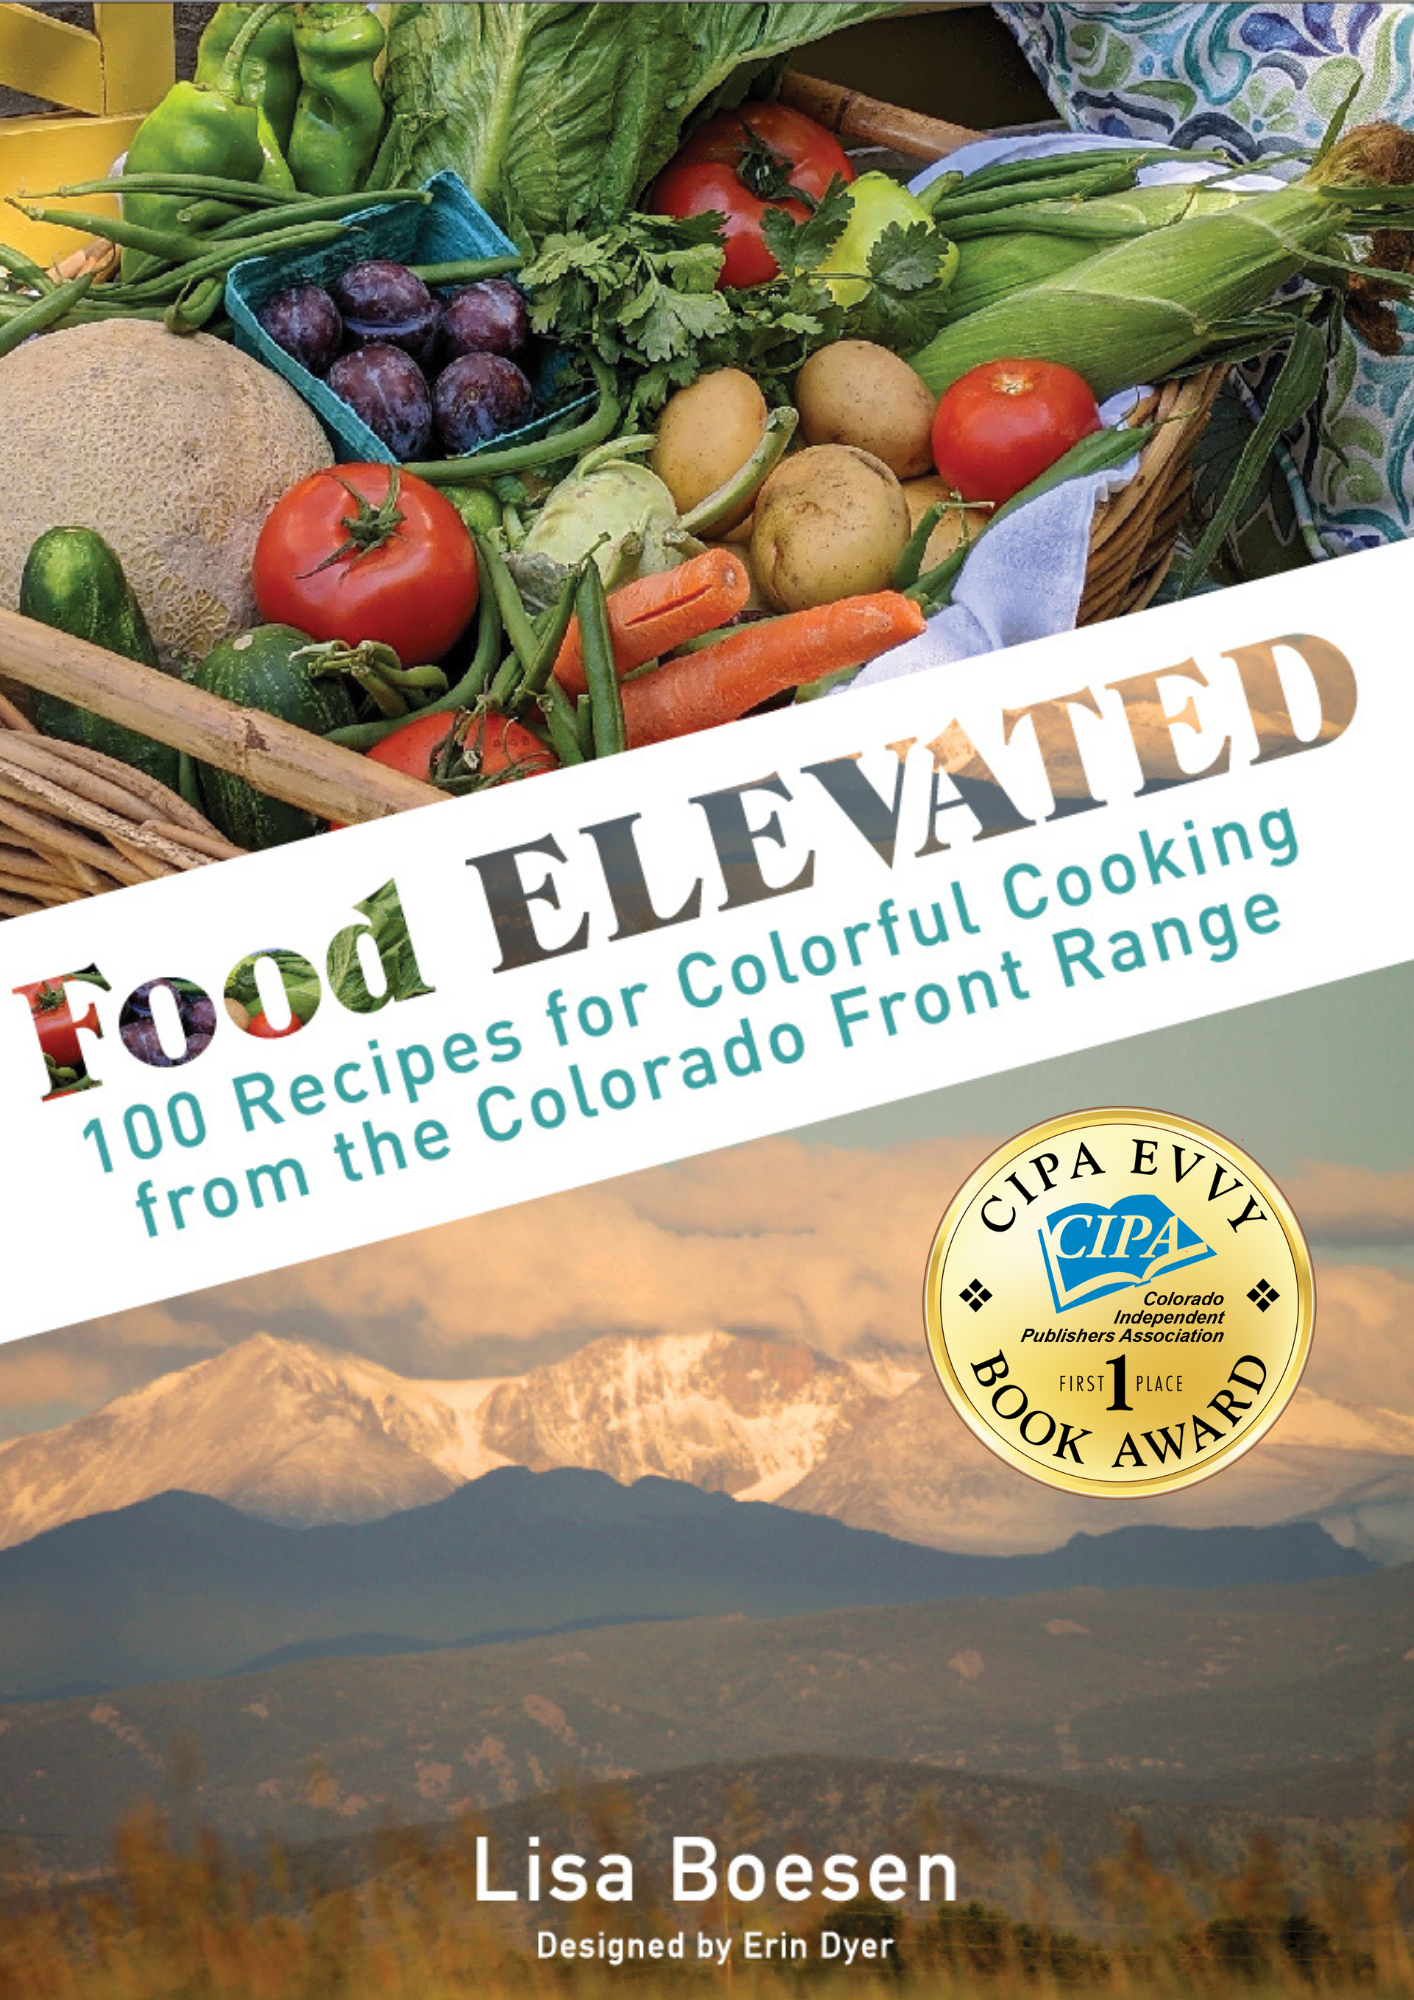 CIPA EVVY Award cookbook